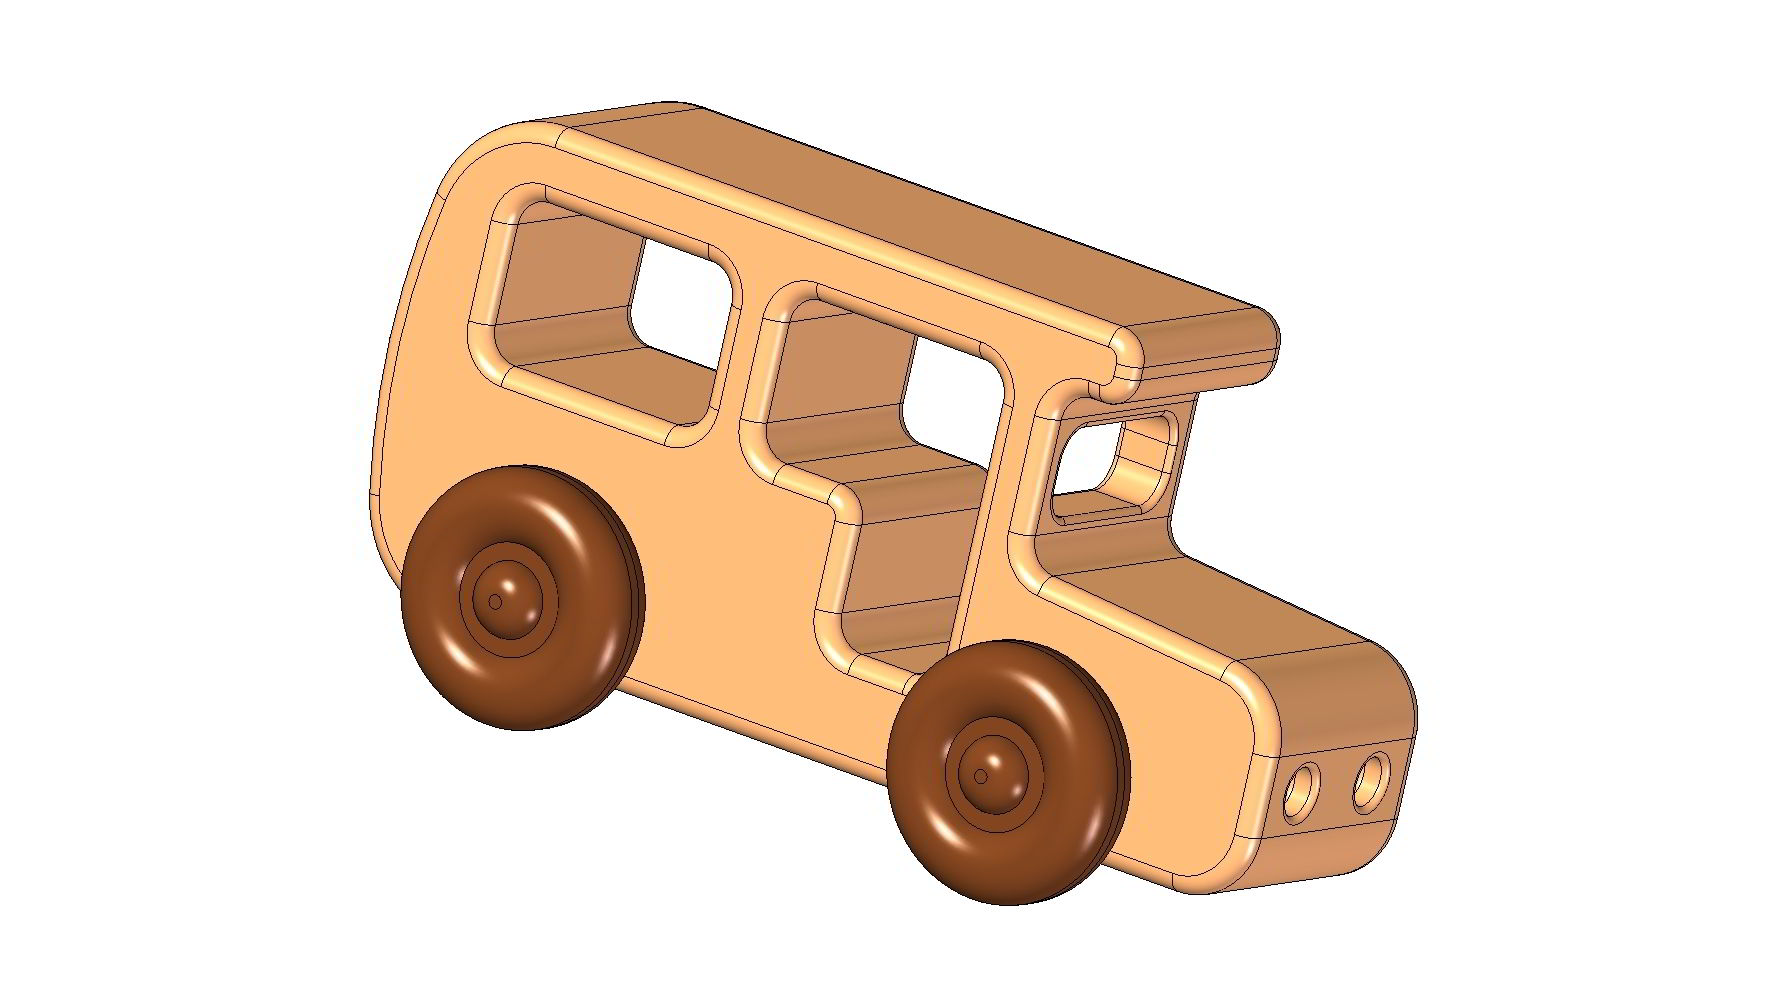 download complete plan wooden bus kids toy plan 2 68mb